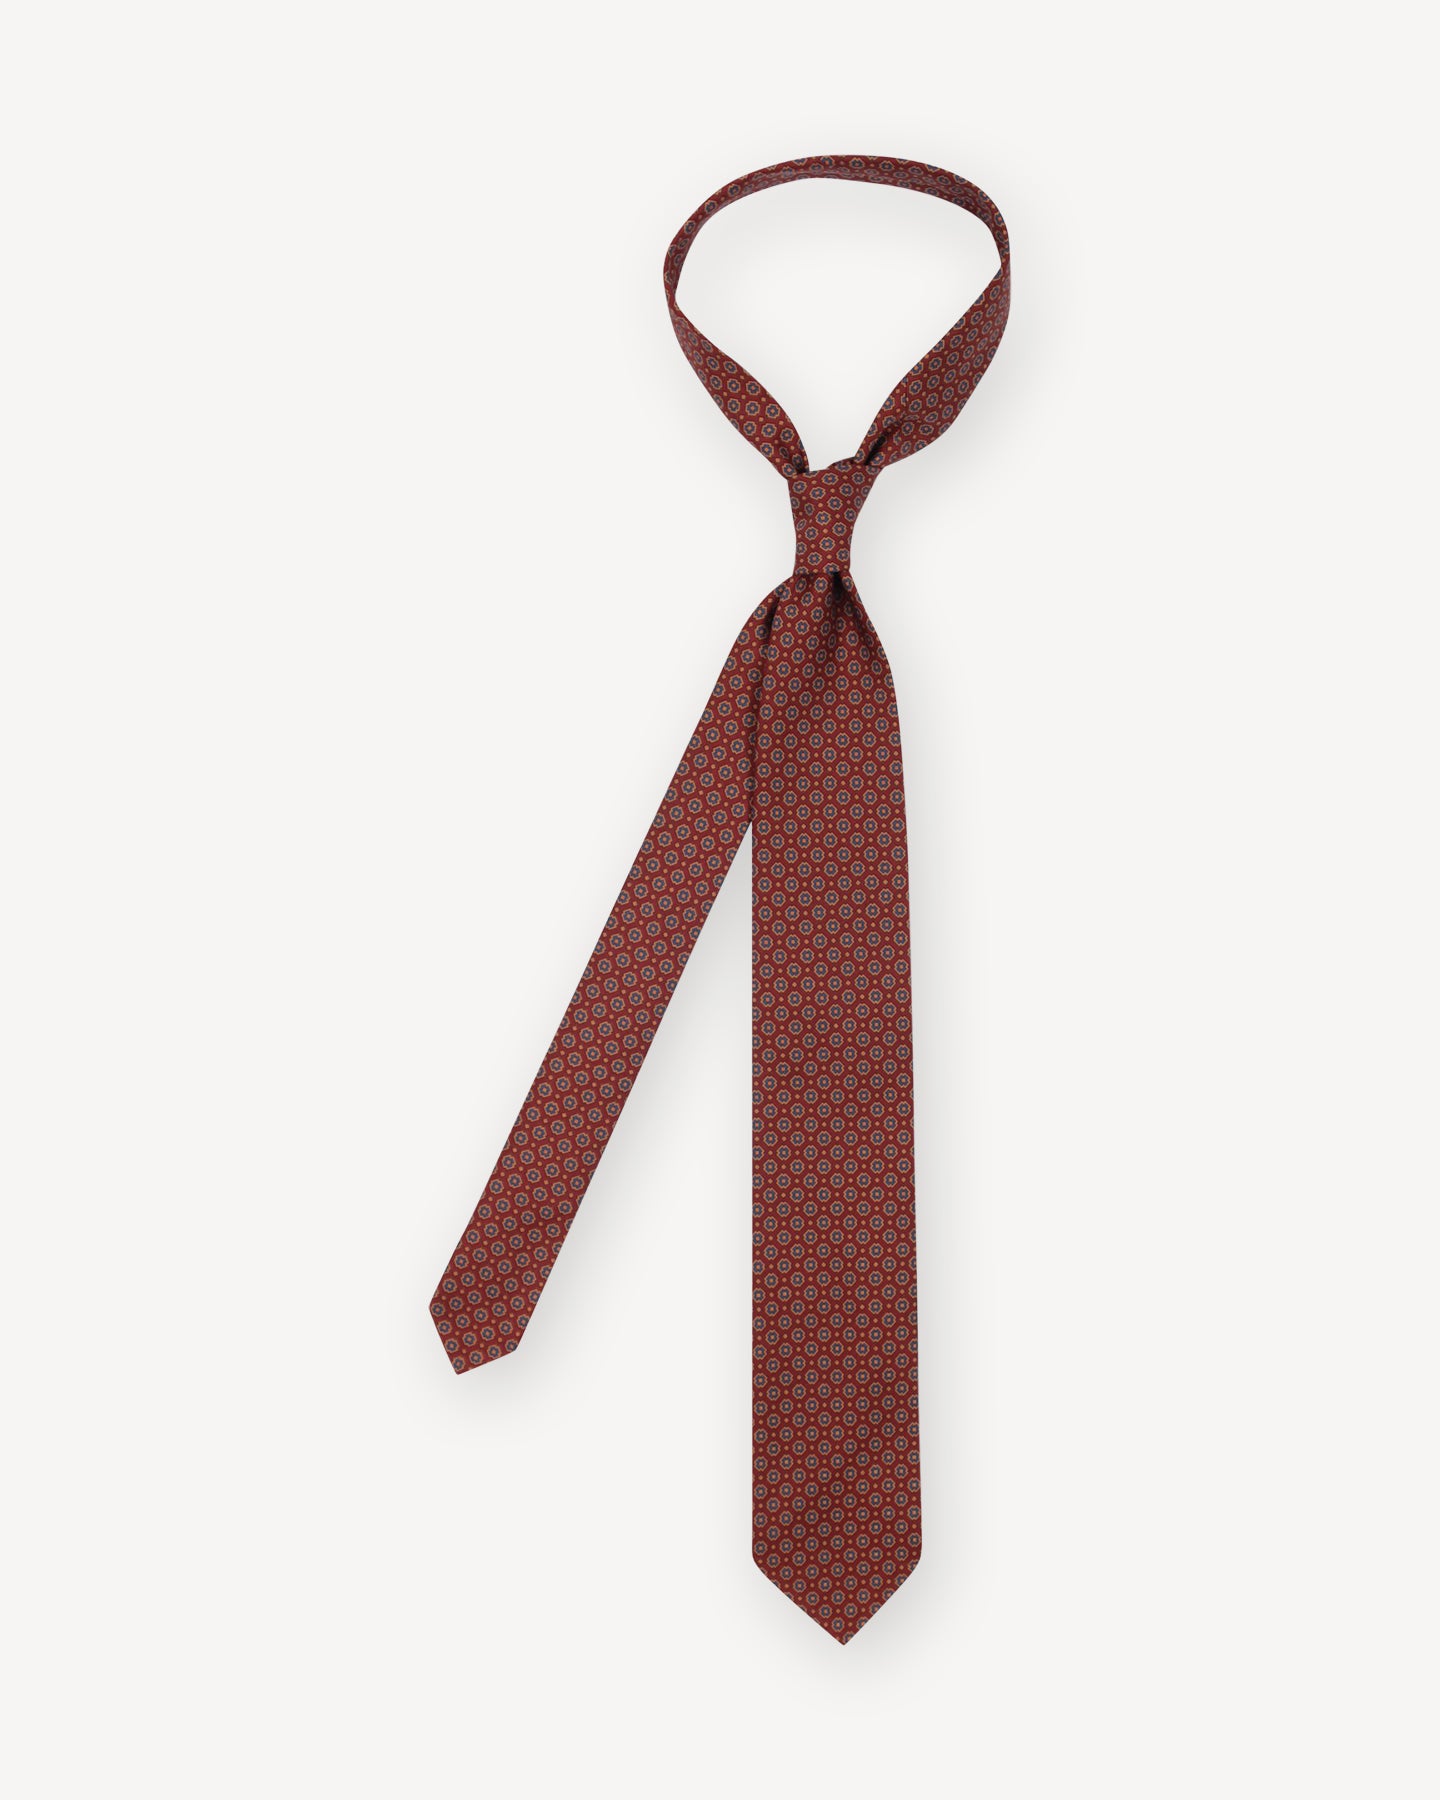 Lined Stripes Tie S00 - Men - Accessories